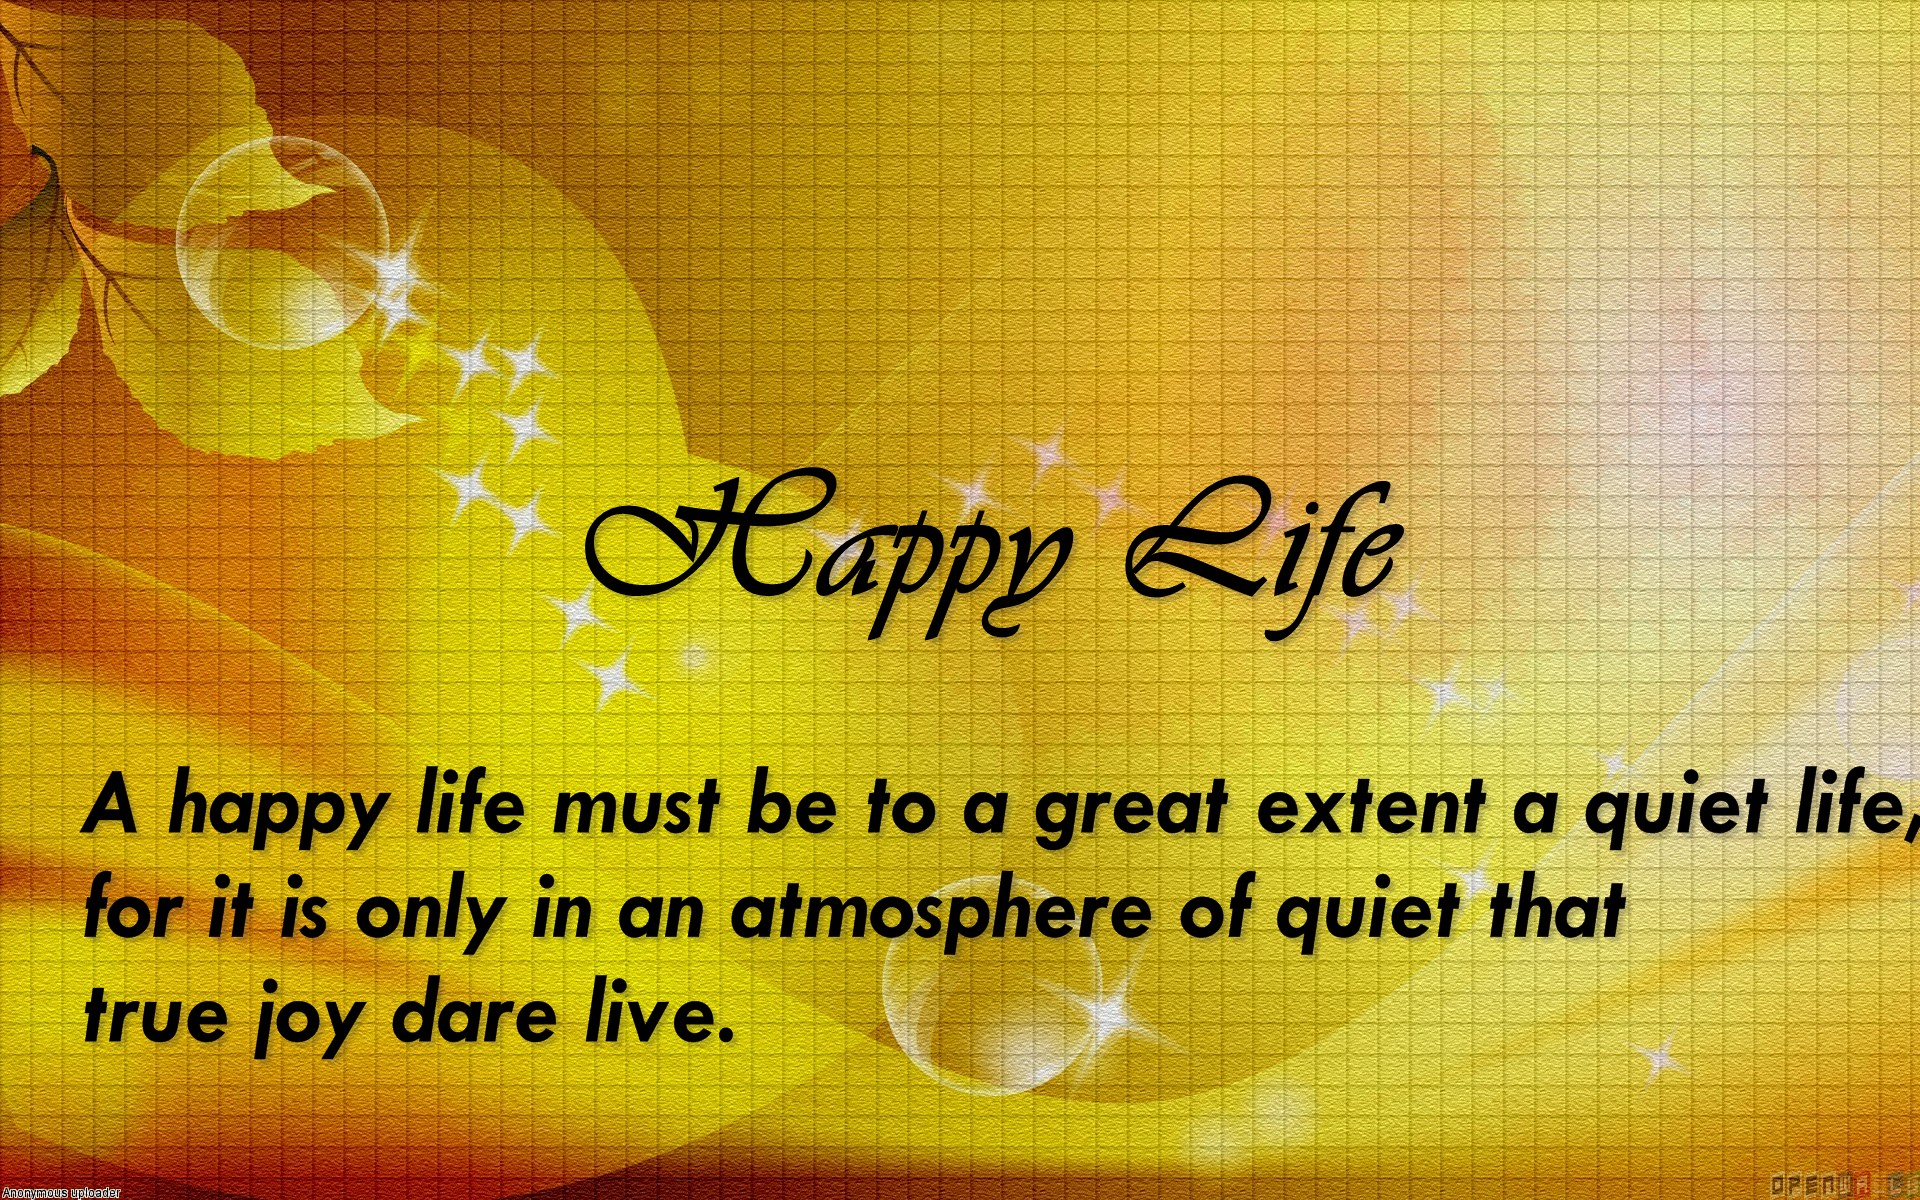 Happy life Quotes | view world round